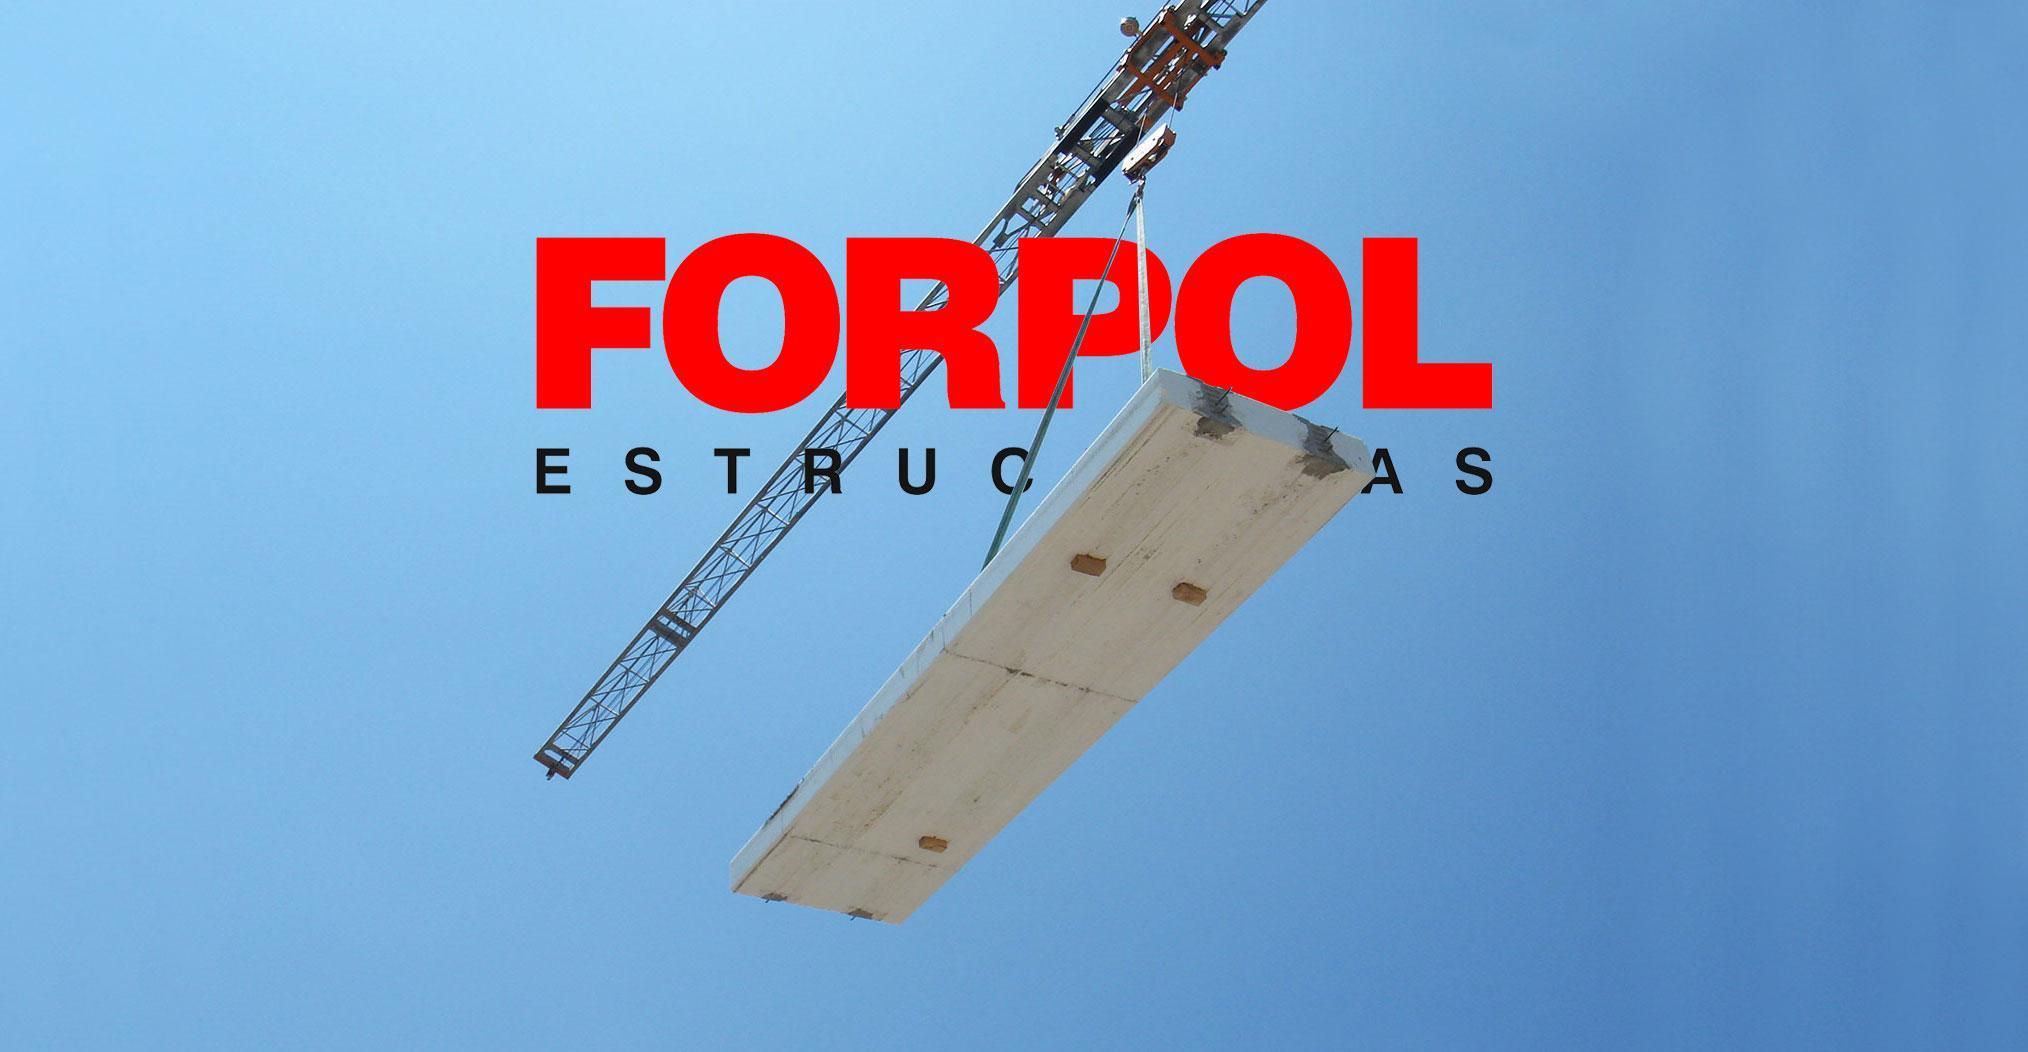 Forpol-Estructuras